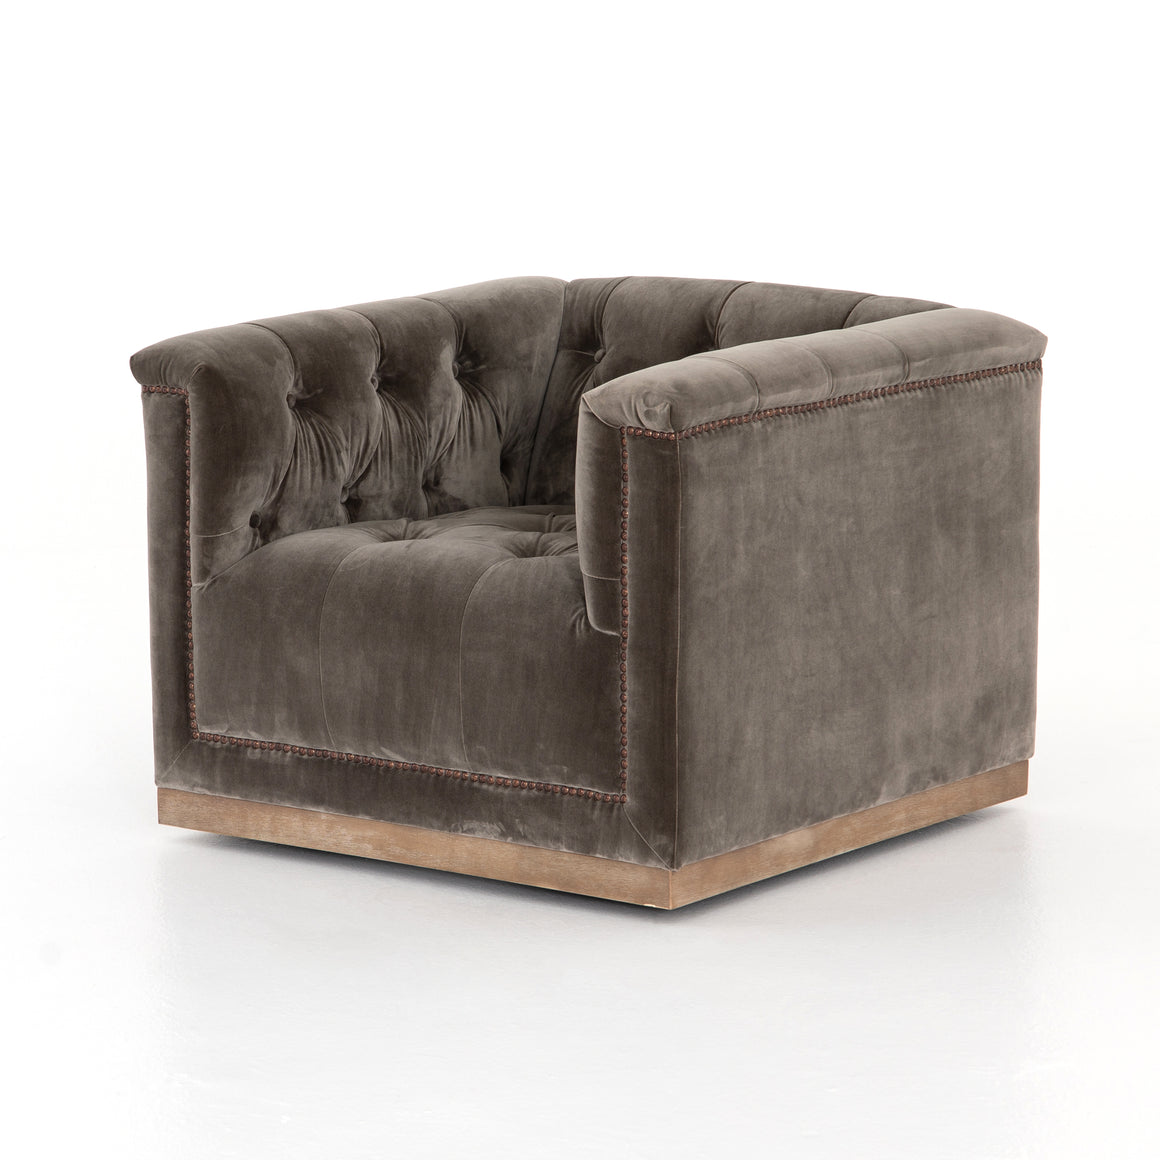 Maxx Velvet Swivel Chair - Sapphire Birch Grey